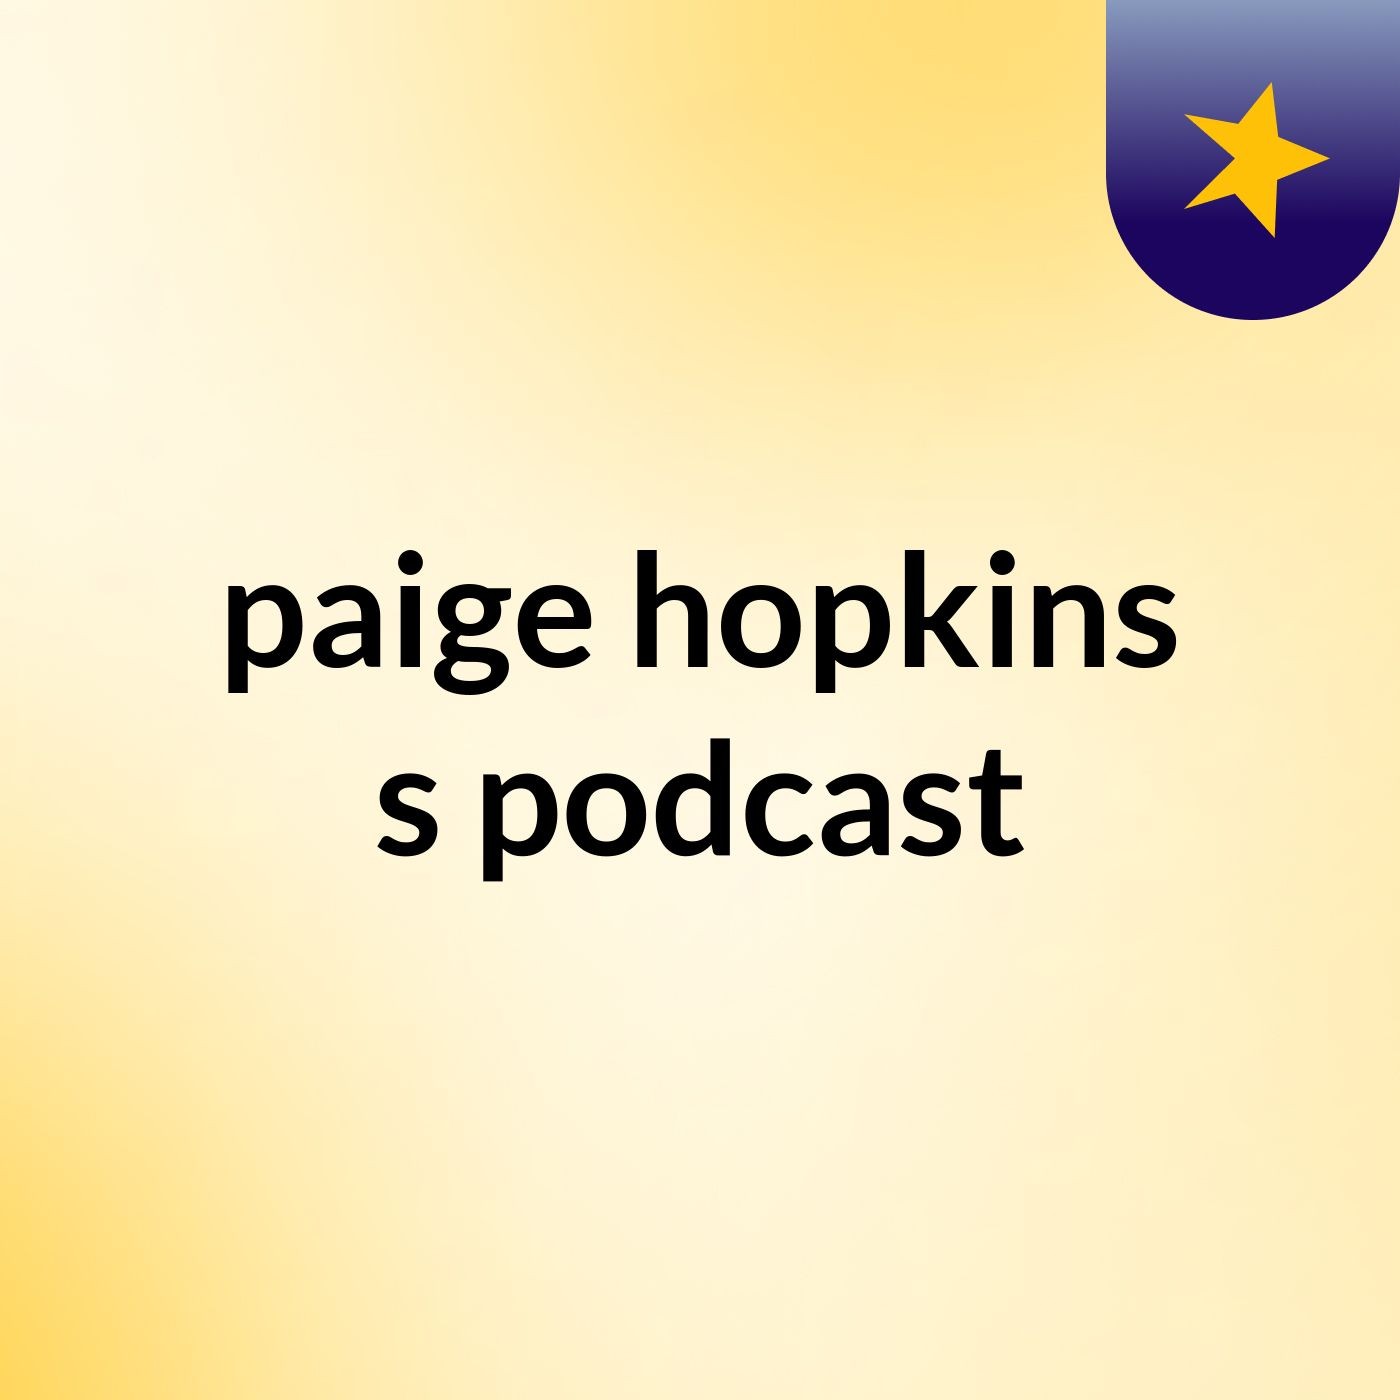 paige hopkins's podcast